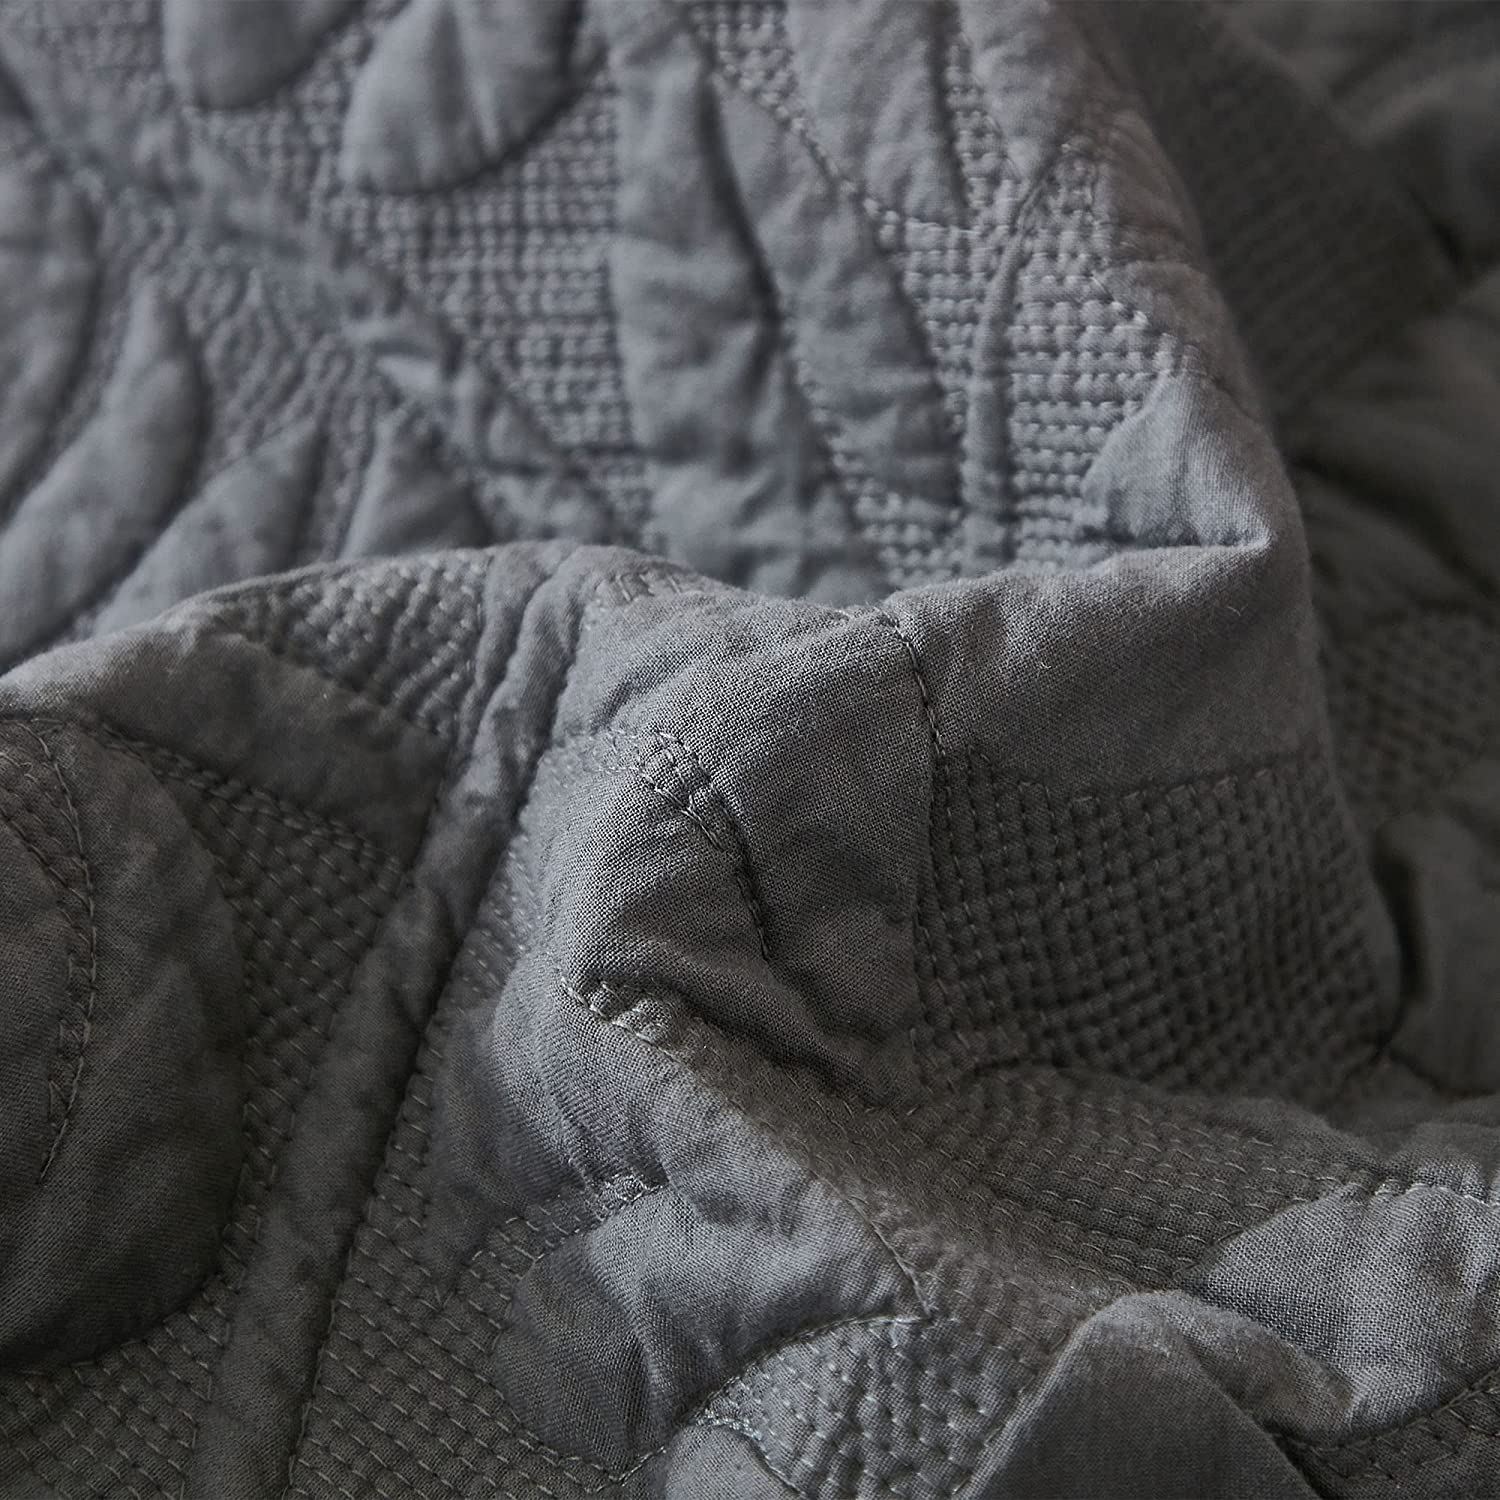 3-Piece 100% Cotton Oversized Bedspread Set Coverlet Set Lightweight Quilt Set Embroidery Farmhouse Bedding Set T